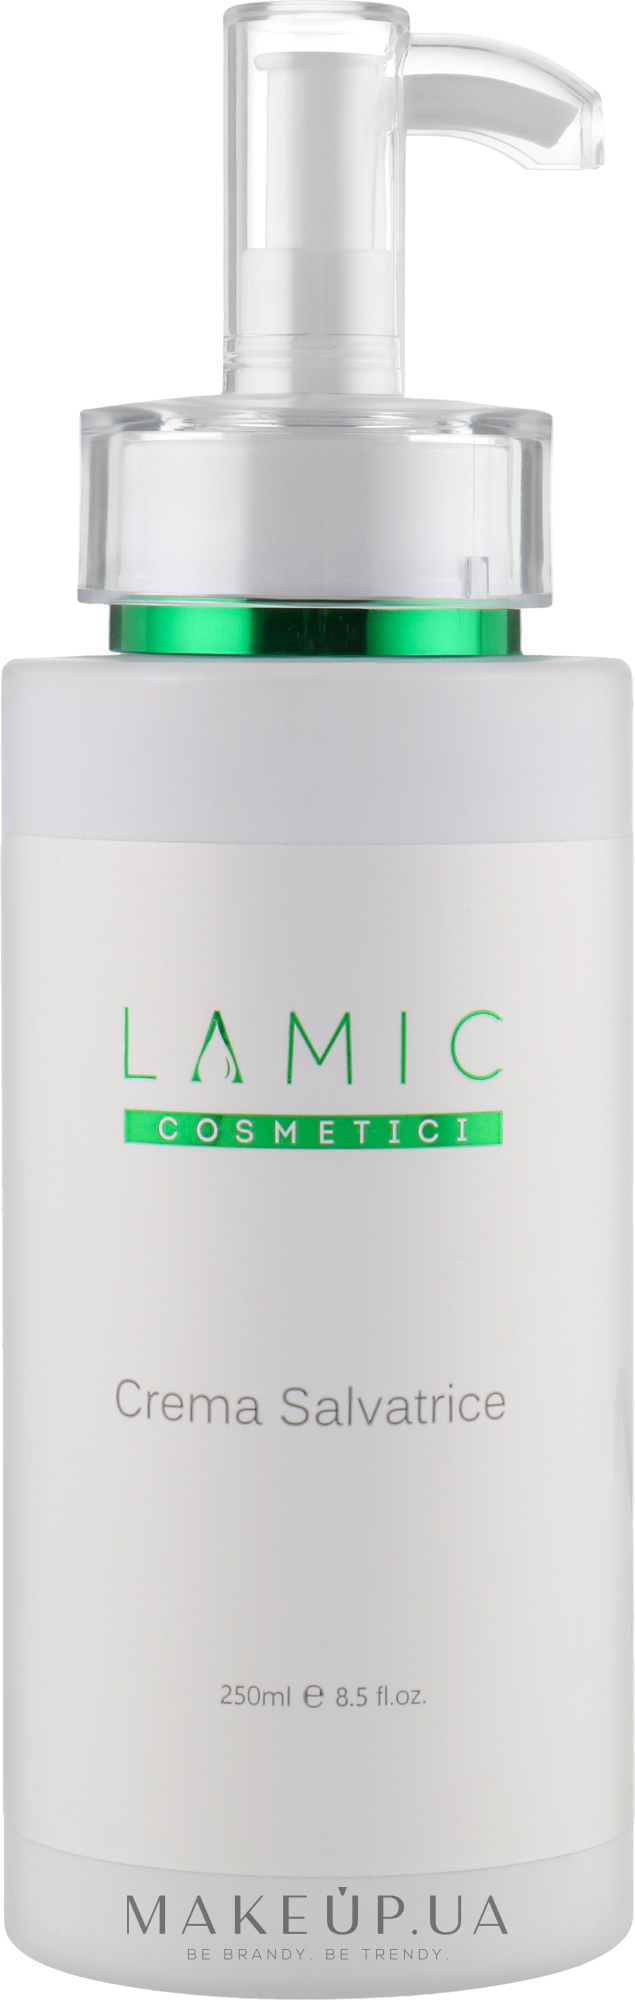 Восстанавливающий крем для лица - Lamic Cosmetici Crema Salvatrice  — фото 250ml